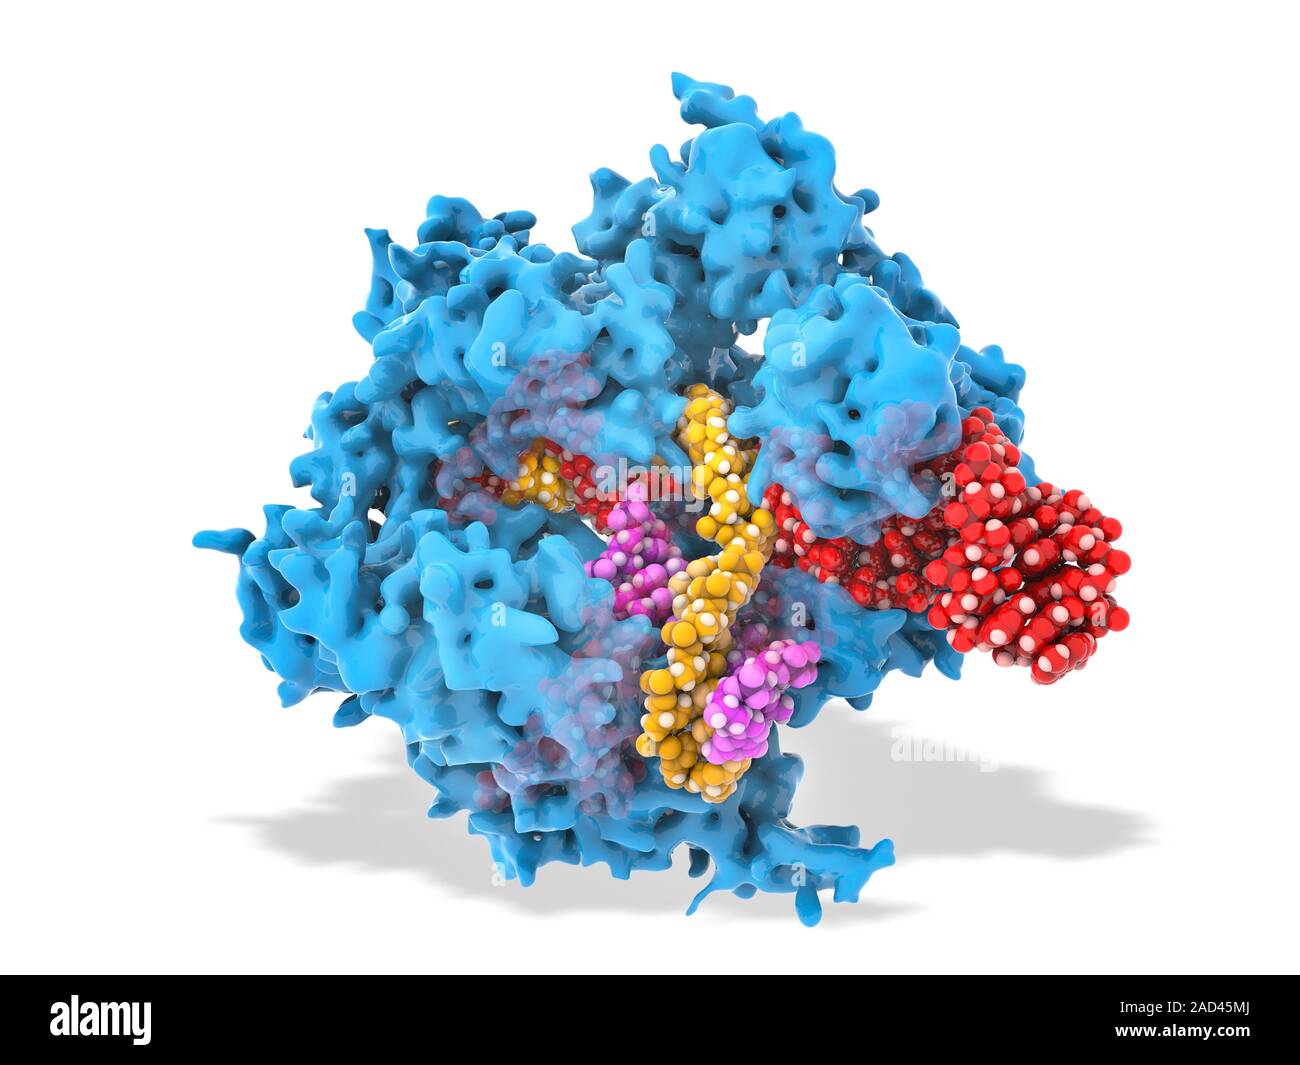 Crispr Cas9 Gene Editing Complex Illustration Of The Molecular Structure Of The Crispr Cas9 4556